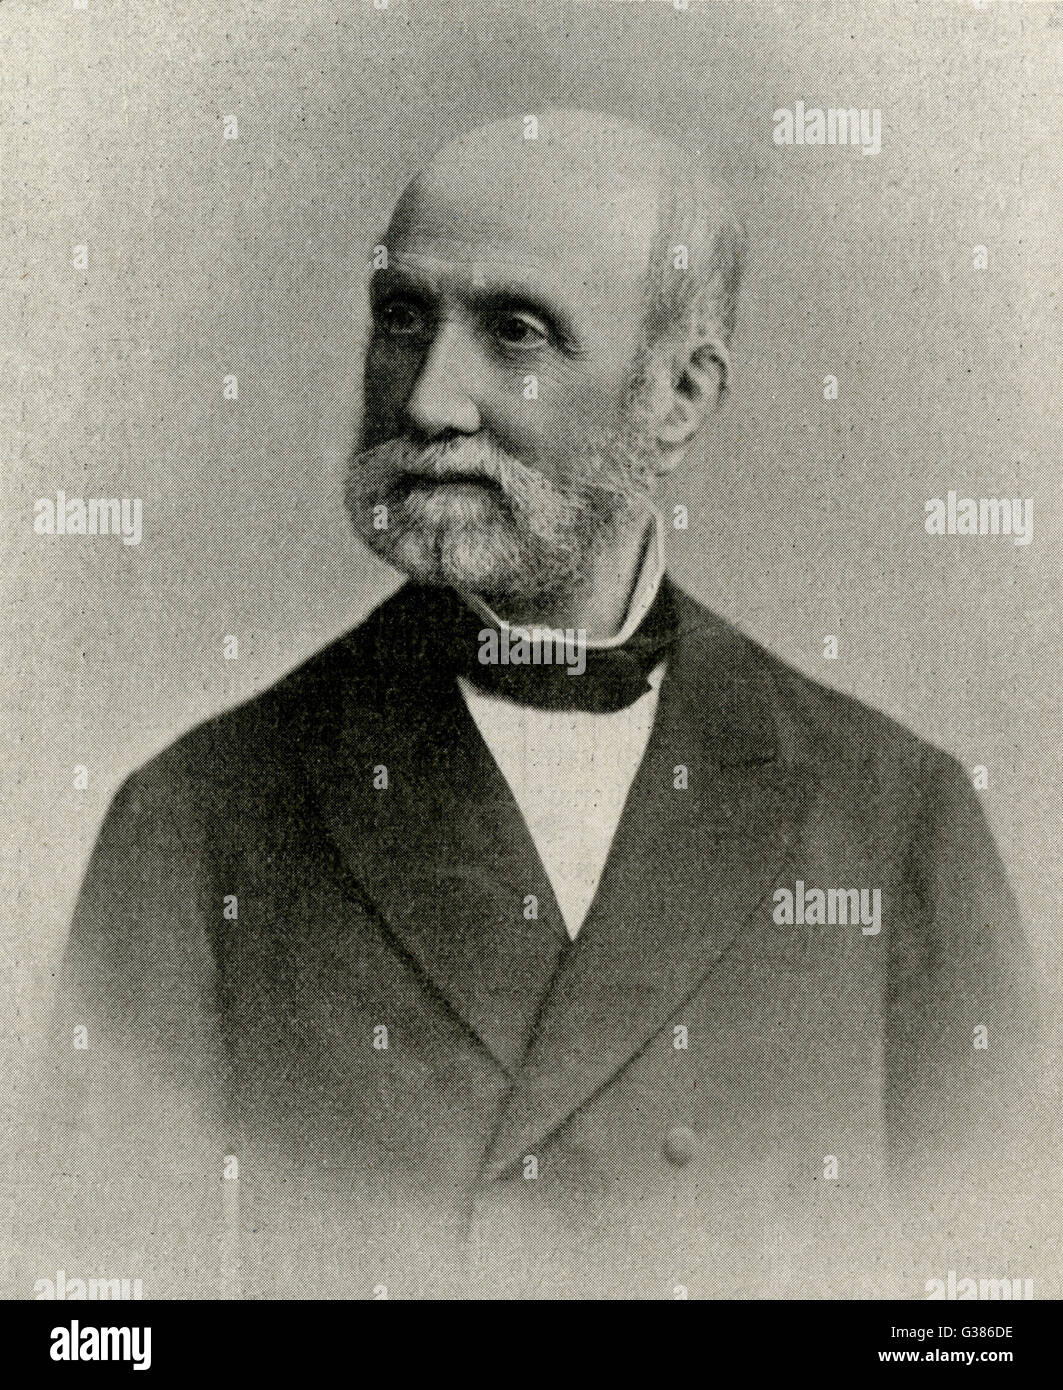 WILHELM KARL VON ROTHSCHILD  Member of the German branch of the international  banking family       Date: 1828 - 1901 Stock Photo